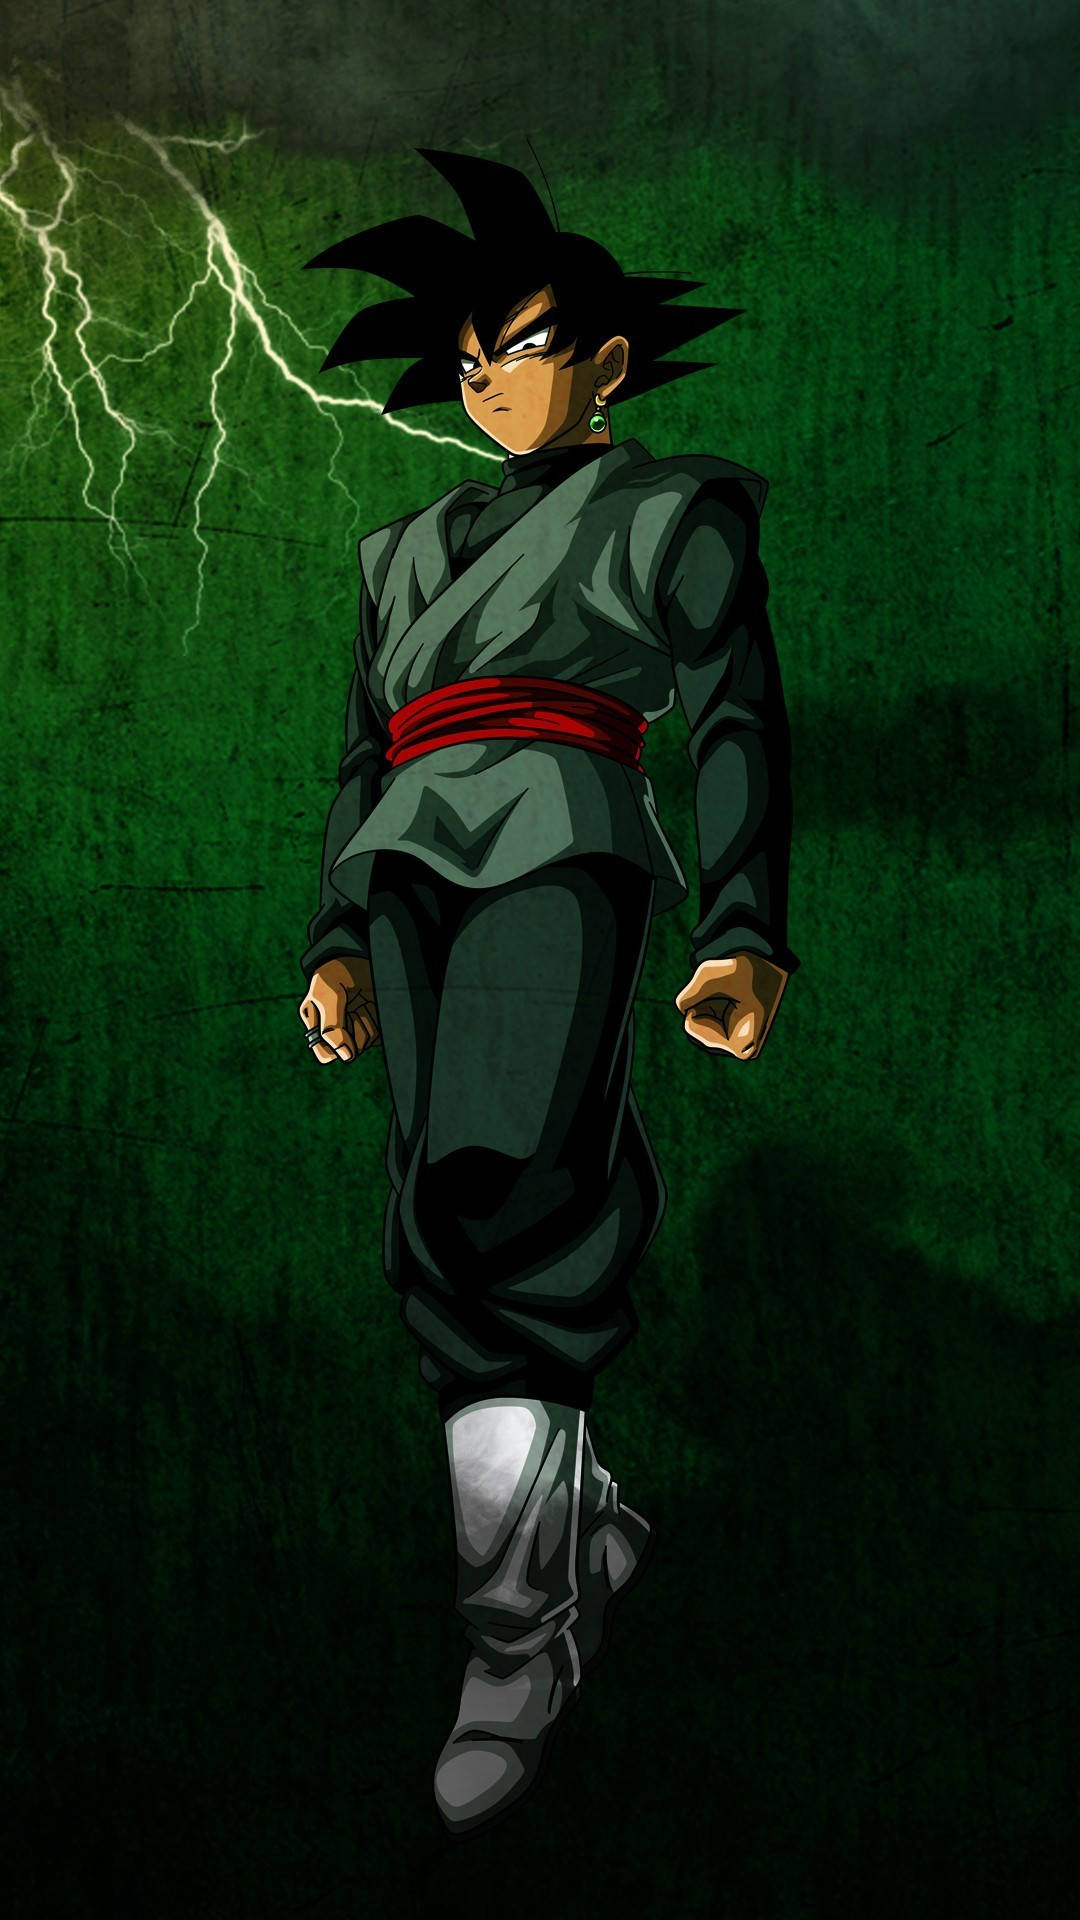 Goku Black Green Grunge Cover Background